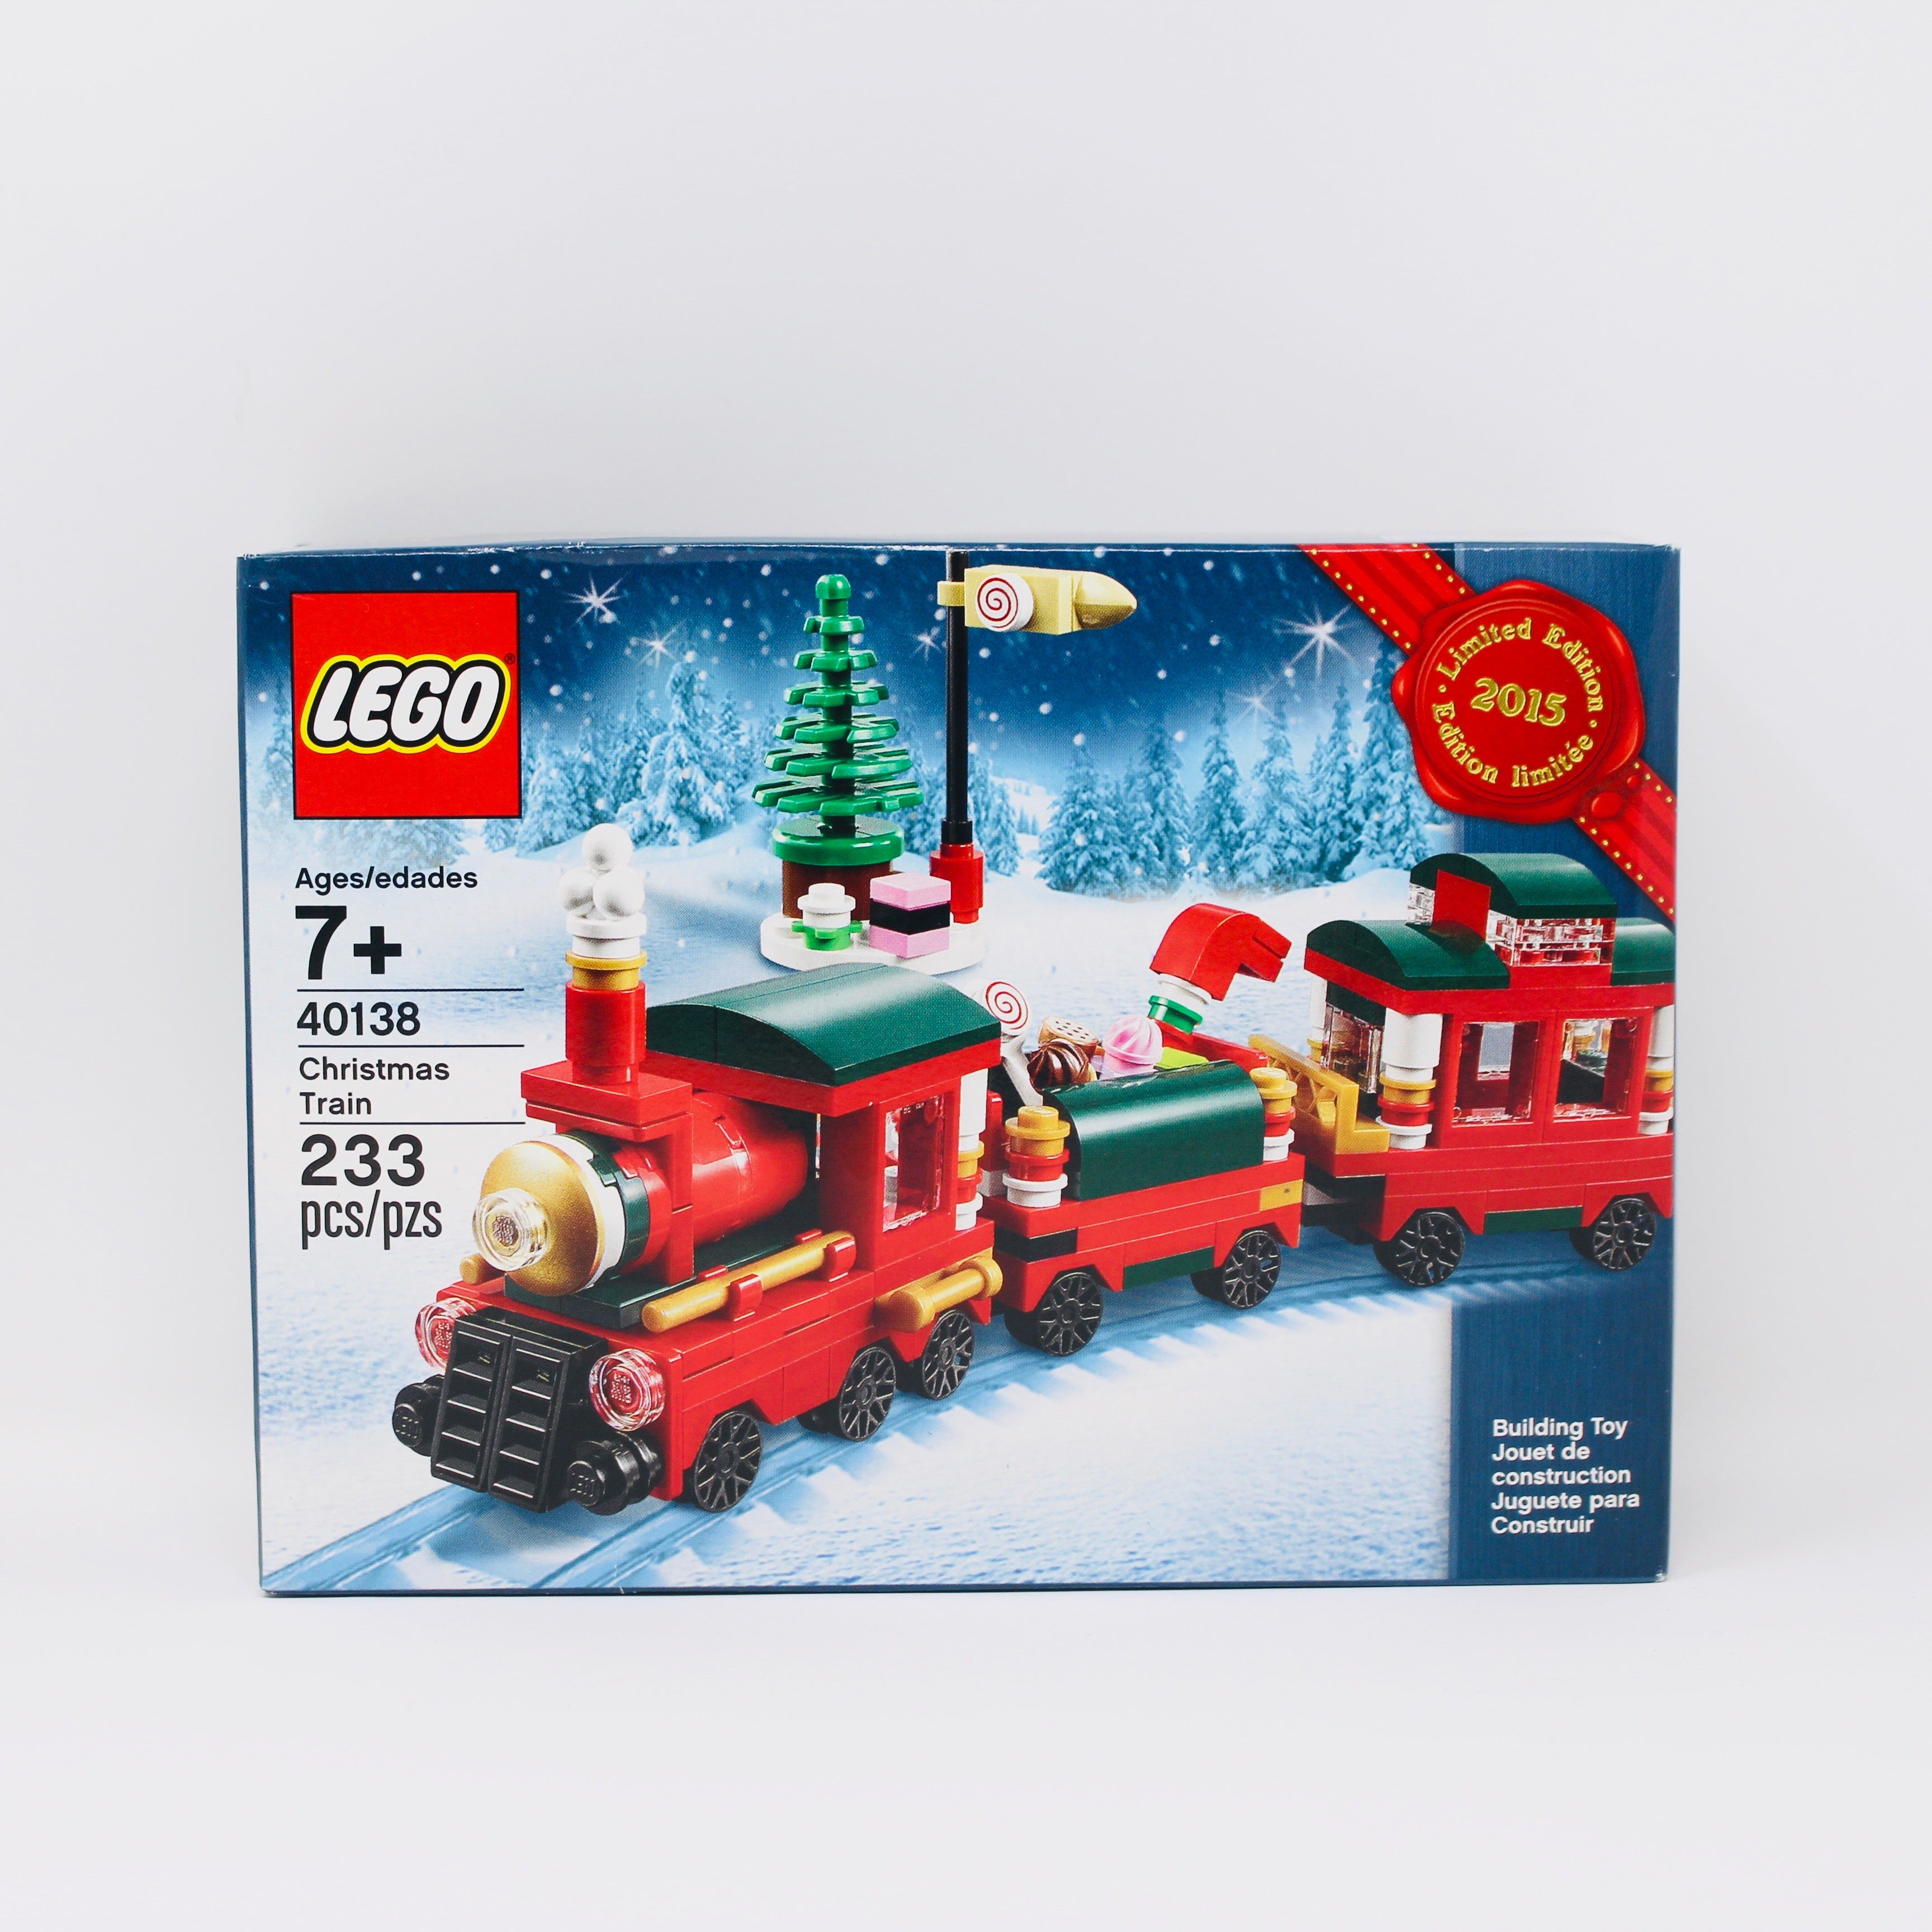 Retired Set 40138 LEGO Christmas Train